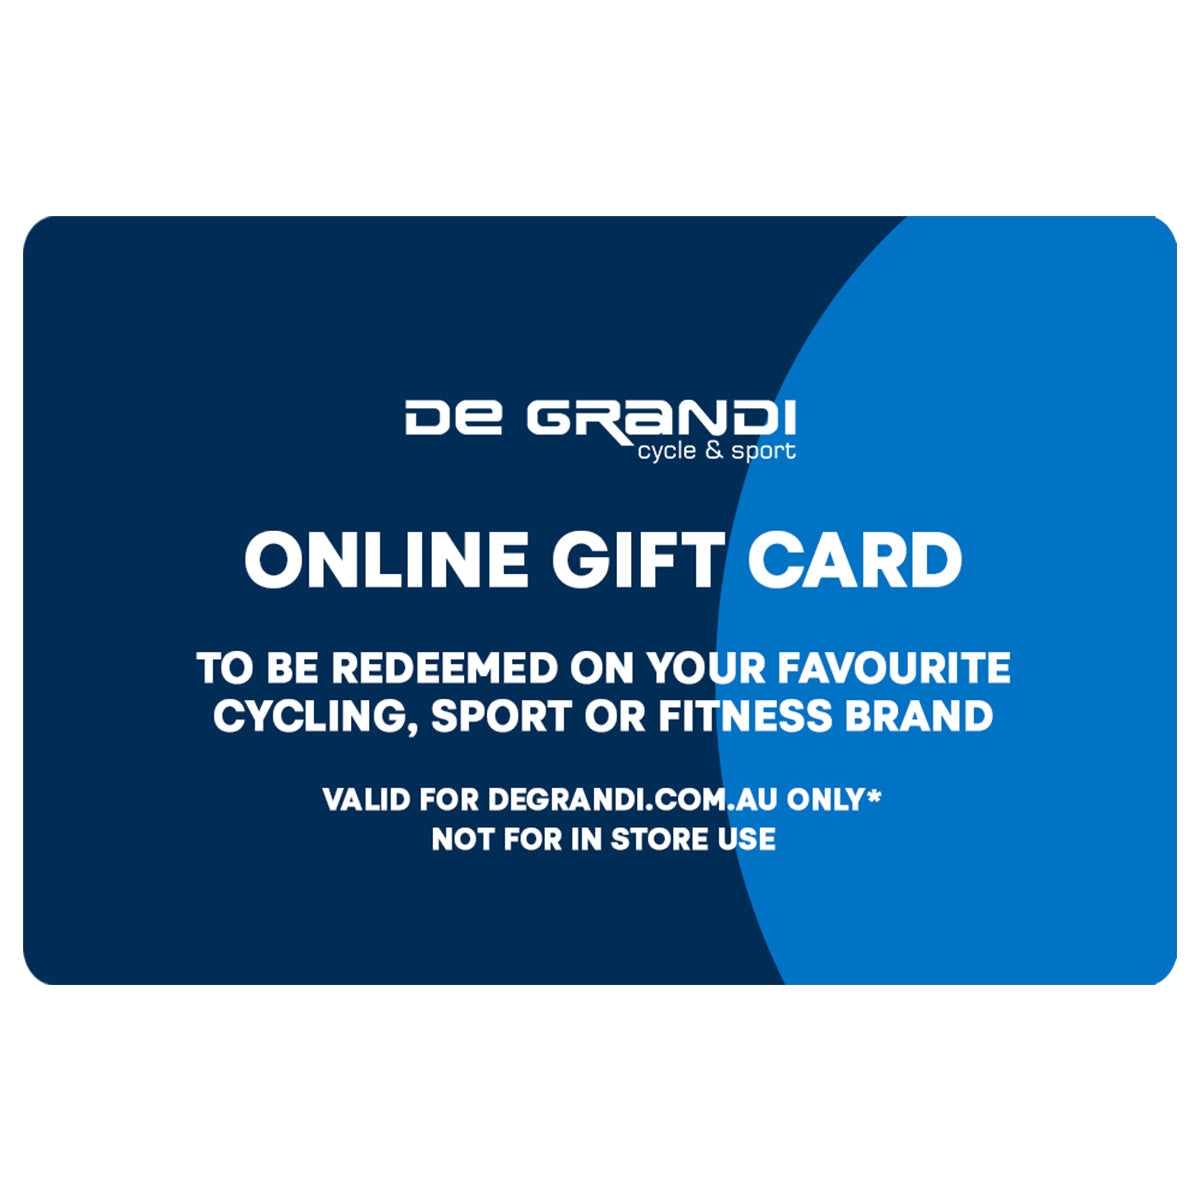 De Grandi Cycle & Sport Online Gift Card